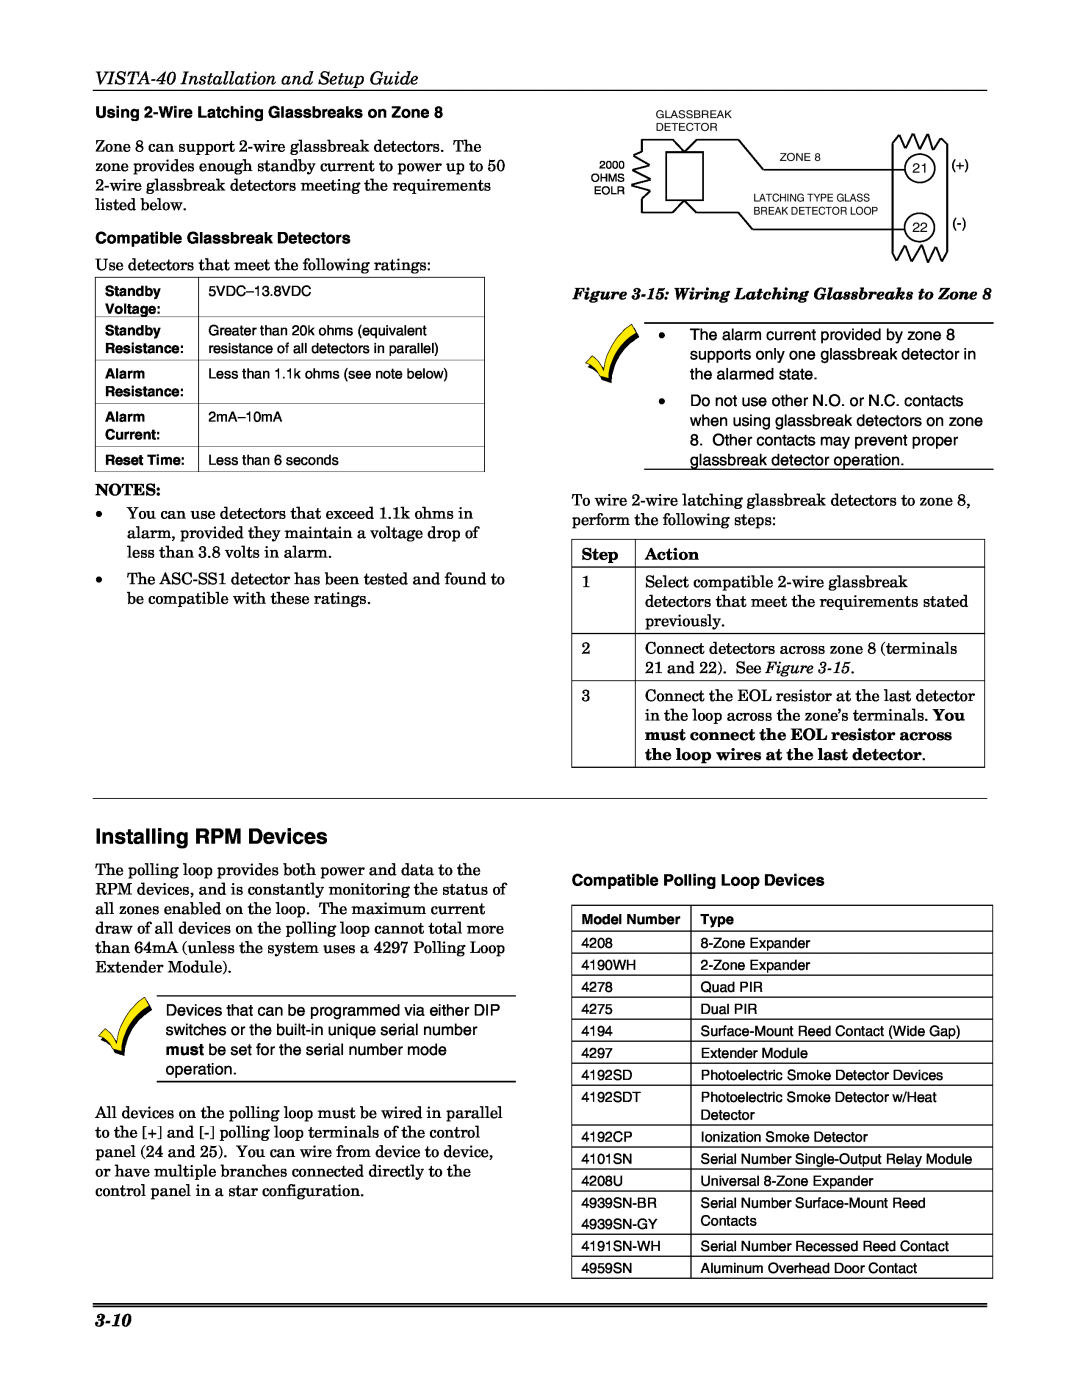 Honeywell ZyAIR G-3000 Installing RPM Devices, VISTA-40Installation and Setup Guide, 3-10, Compatible Glassbreak Detectors 